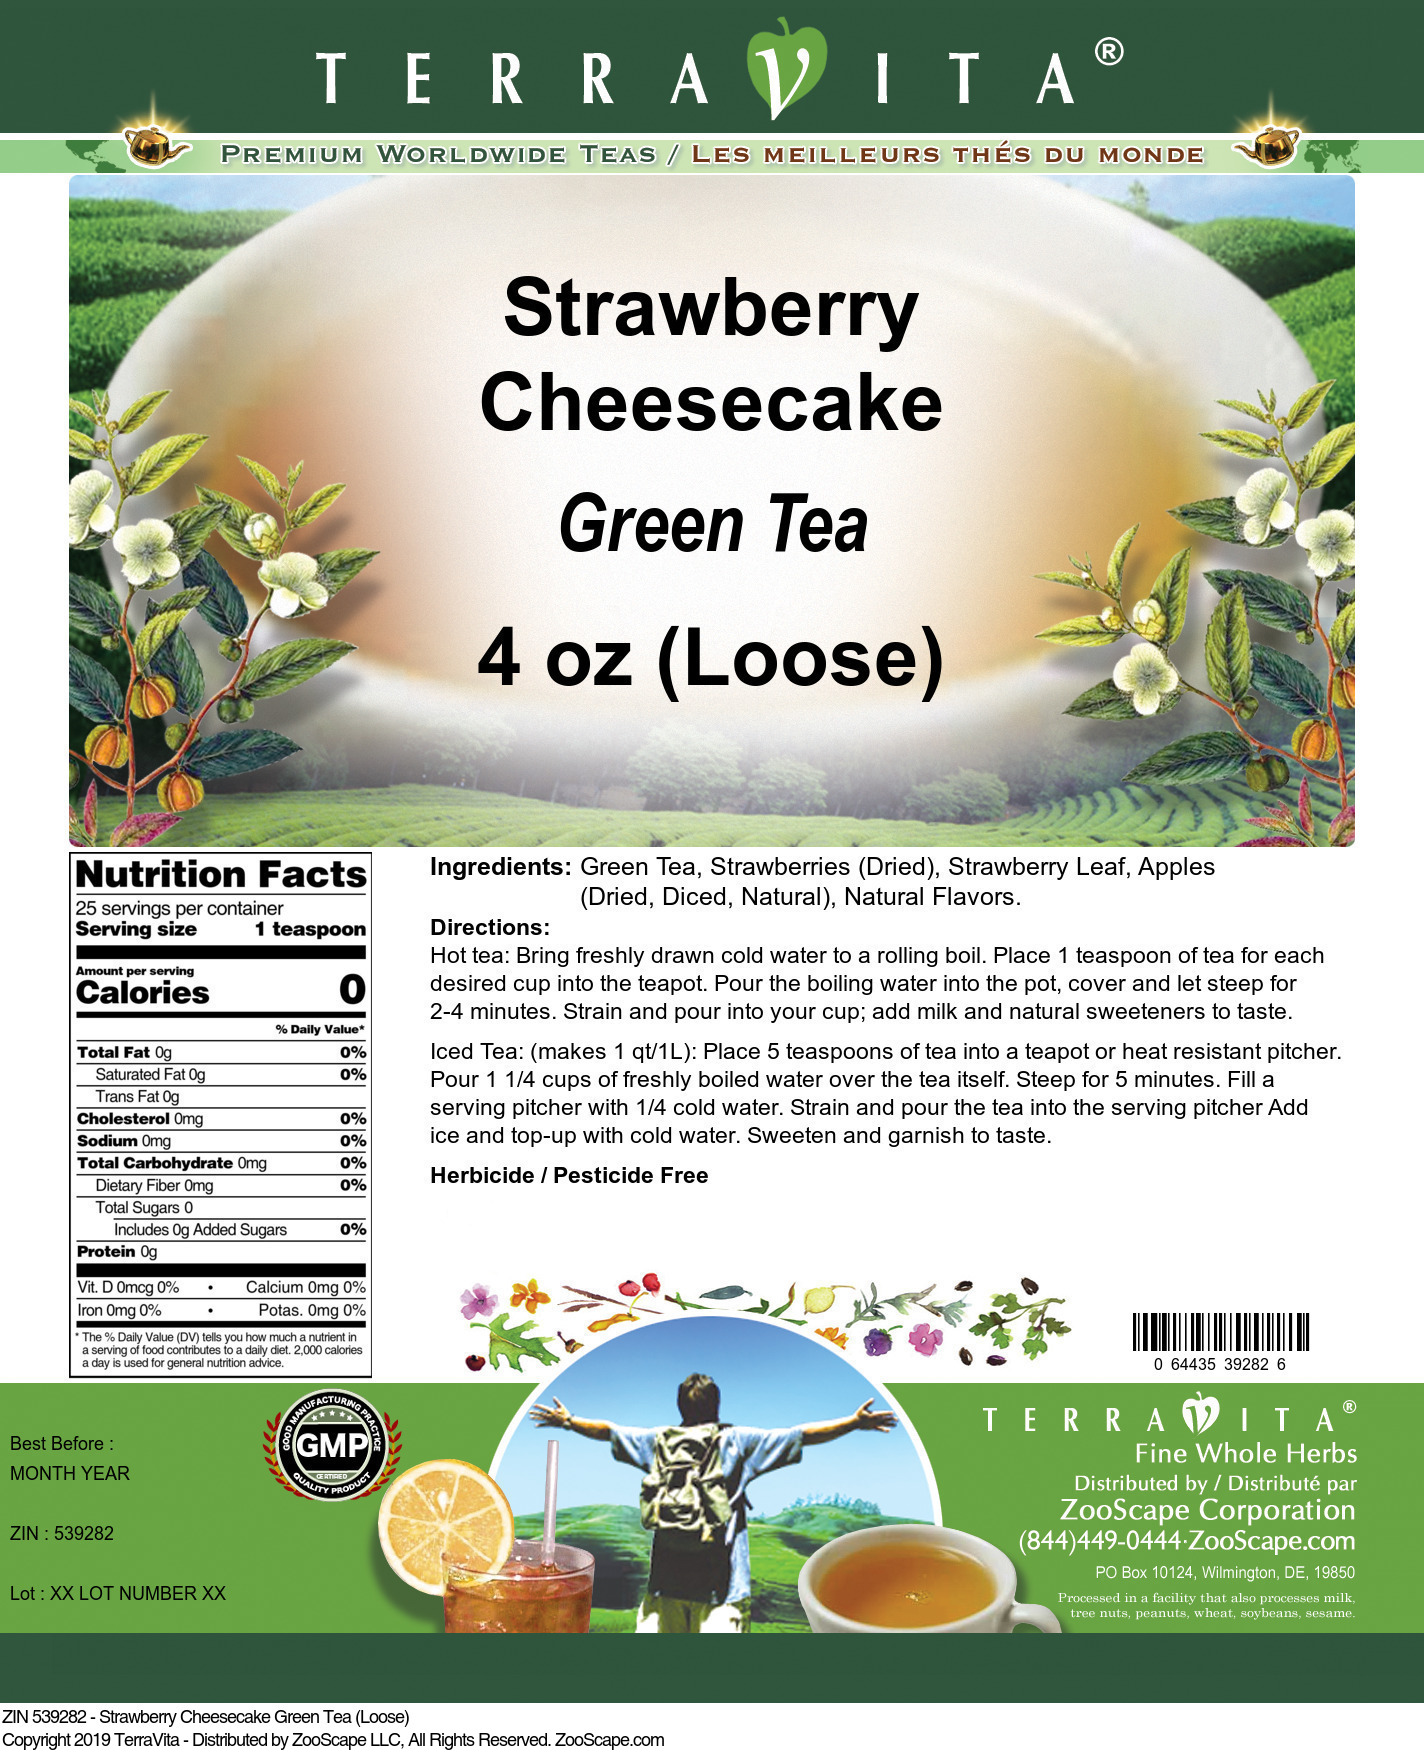 Strawberry Cheesecake Green Tea (Loose) - Label